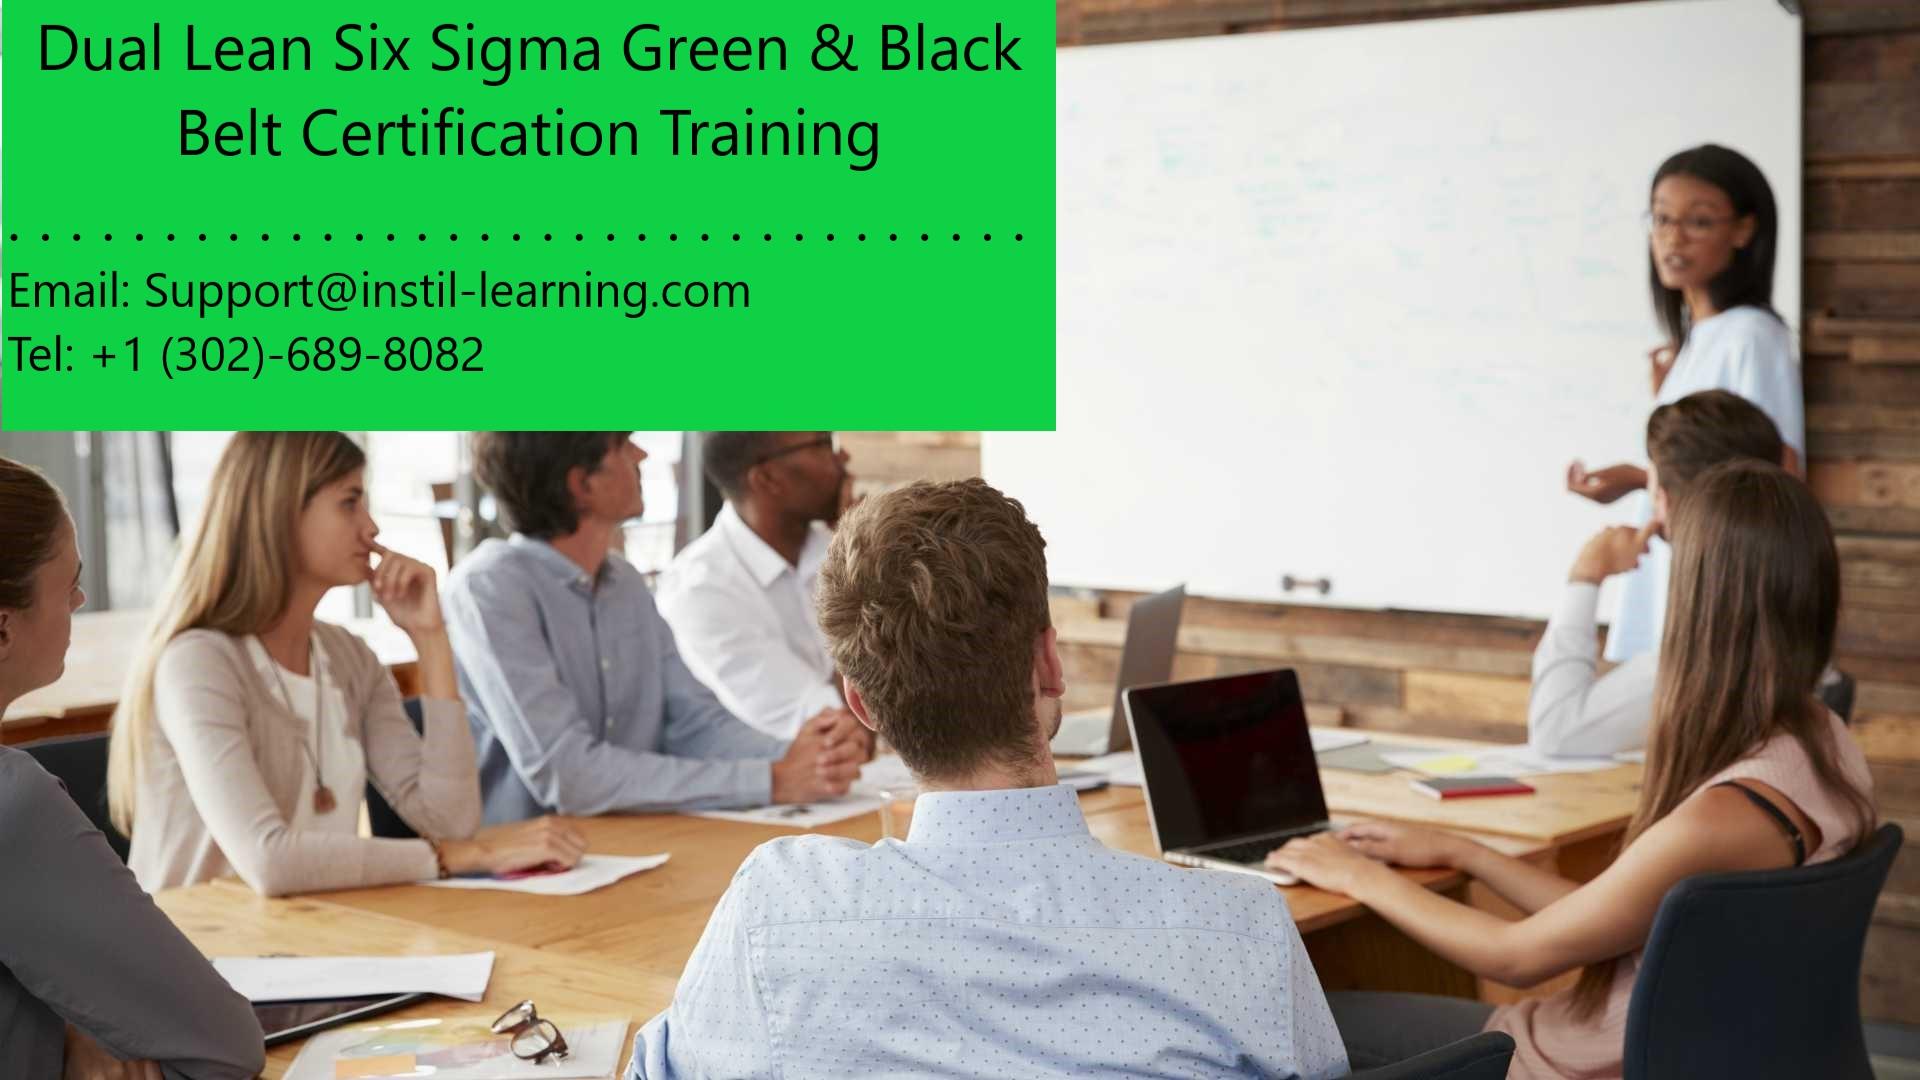 Dual Lean Six Sigma Green & Black Belt Training in Boston, MA